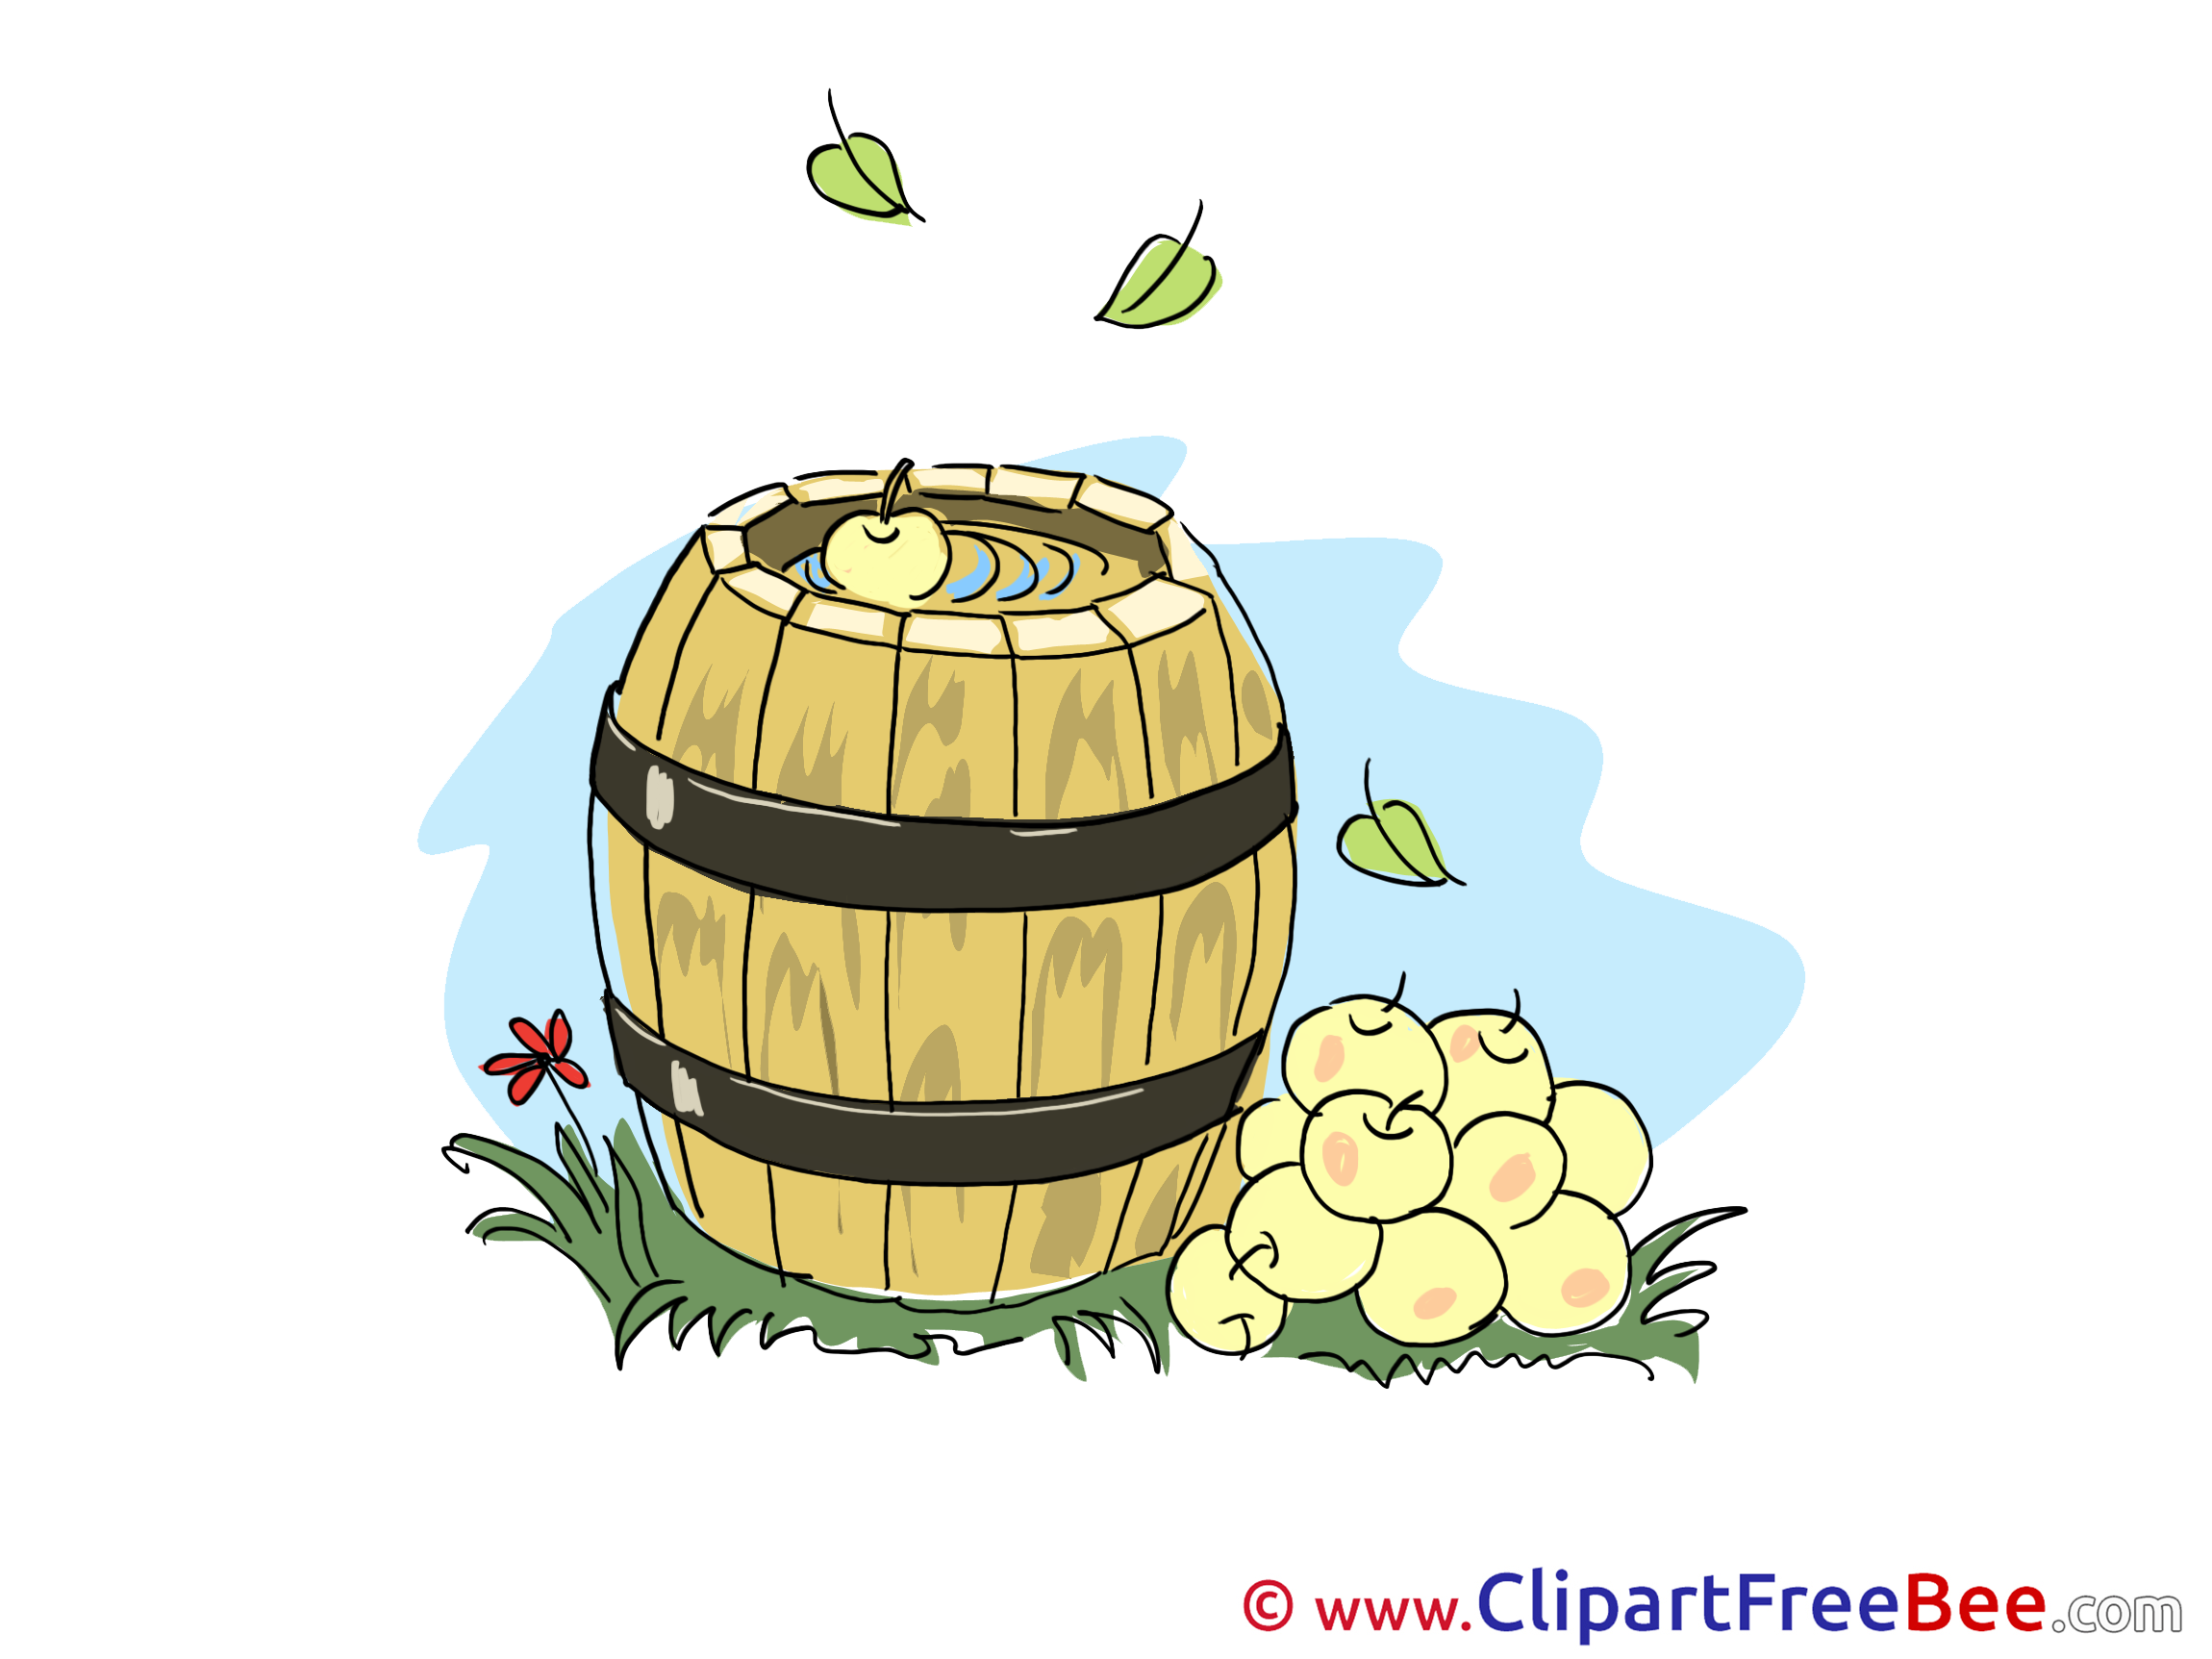 Barrel Apples Clipart free Image download